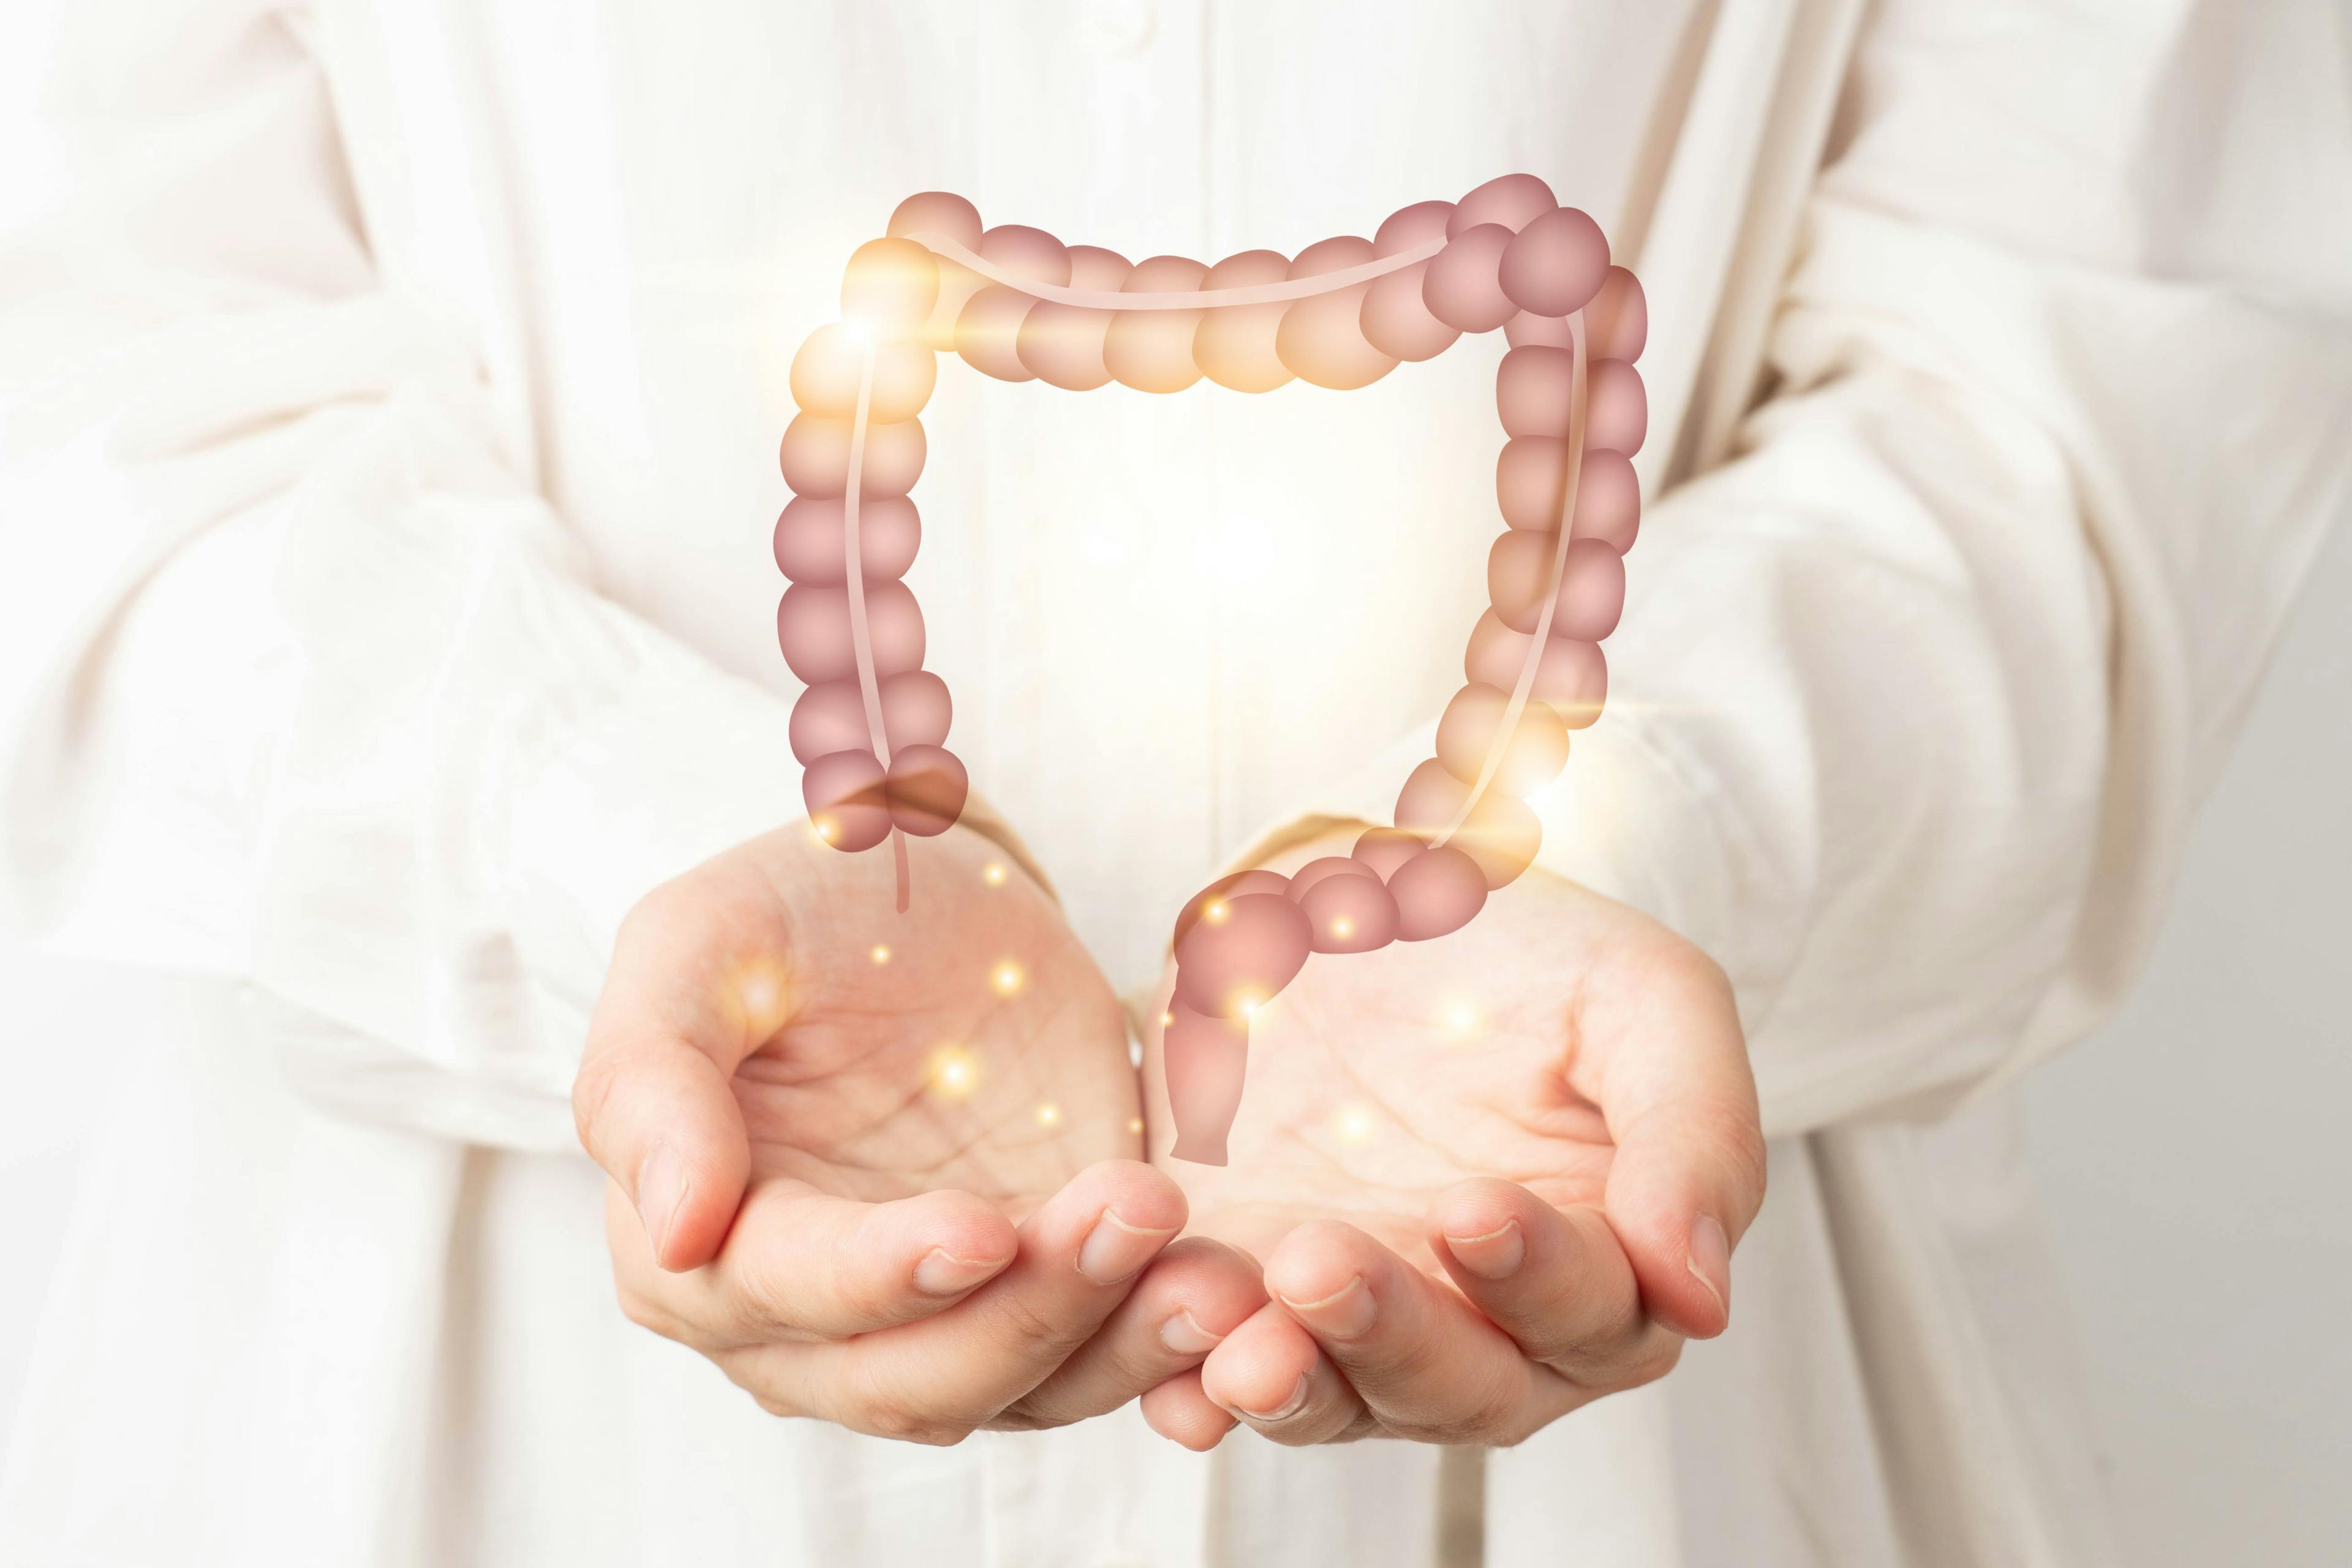 Large intestine in doctor's hands | Image credit: Orawan - stock.adobe.com